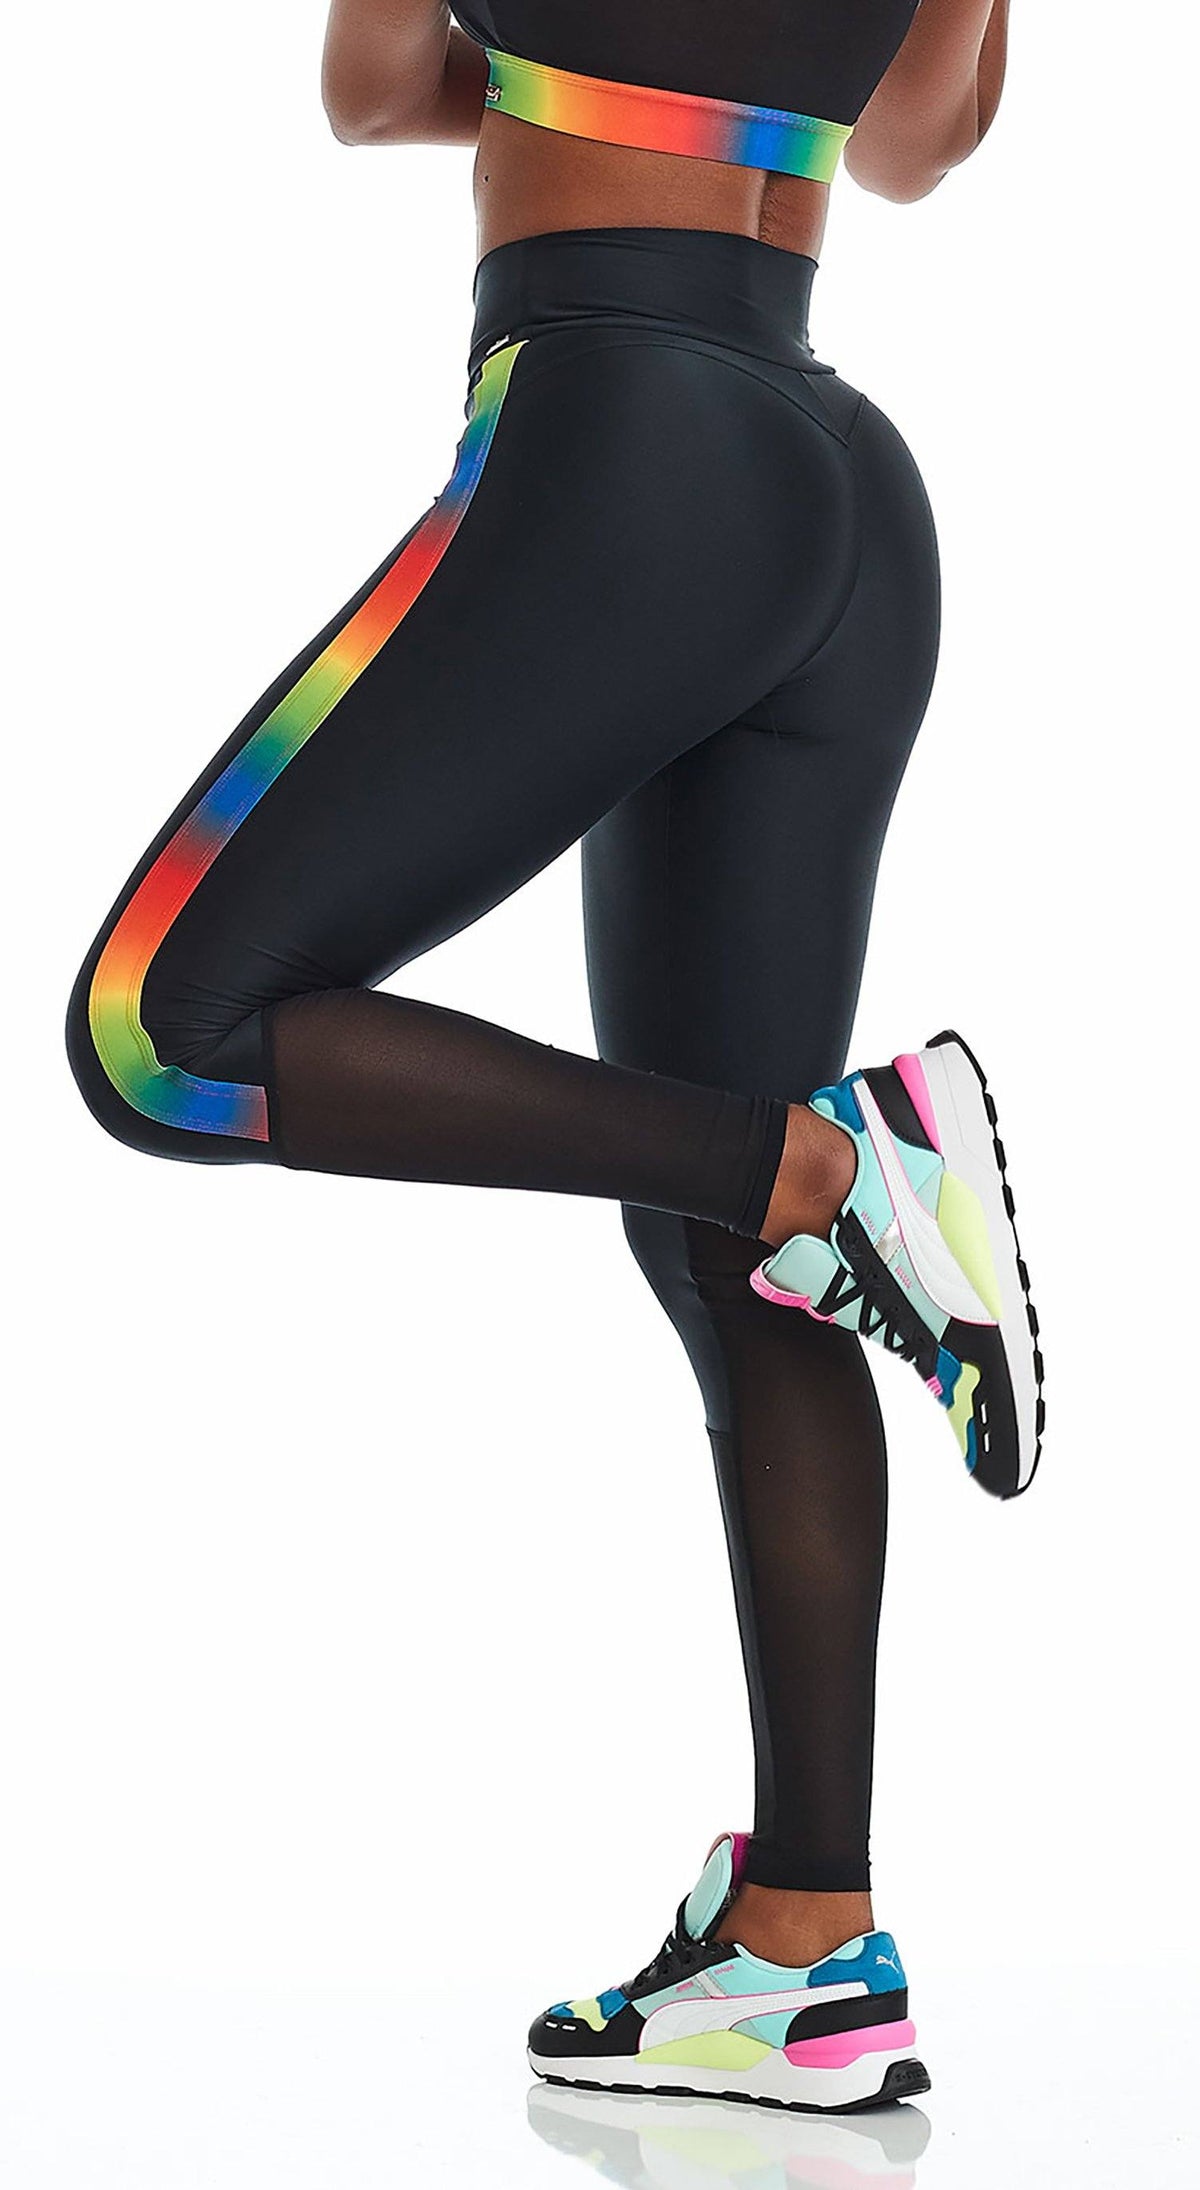 Atletika Colorful Legging - Black